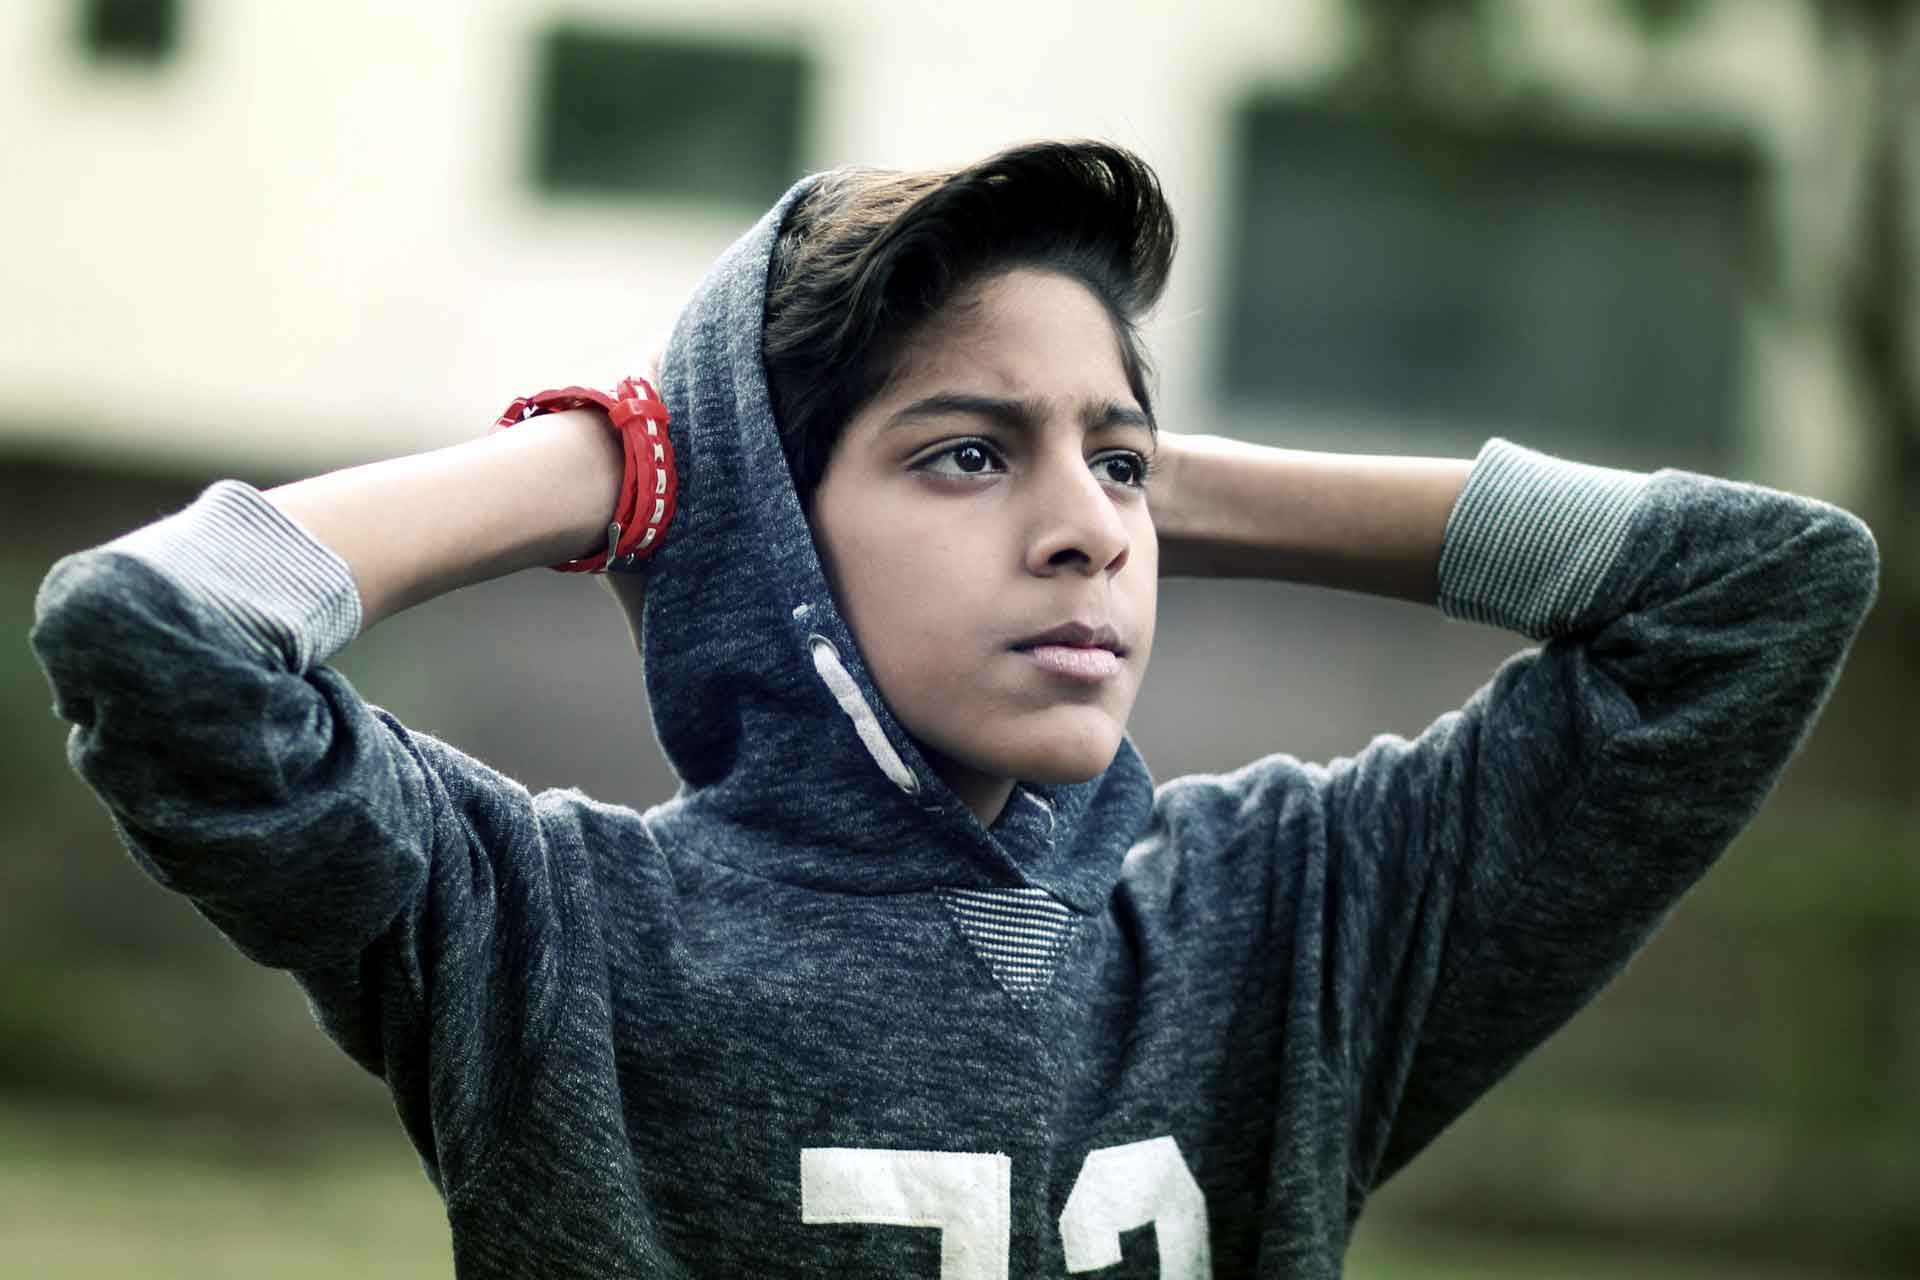 Geschenkideen Teenager
 15 coole Geschenke für Teenager Jungen